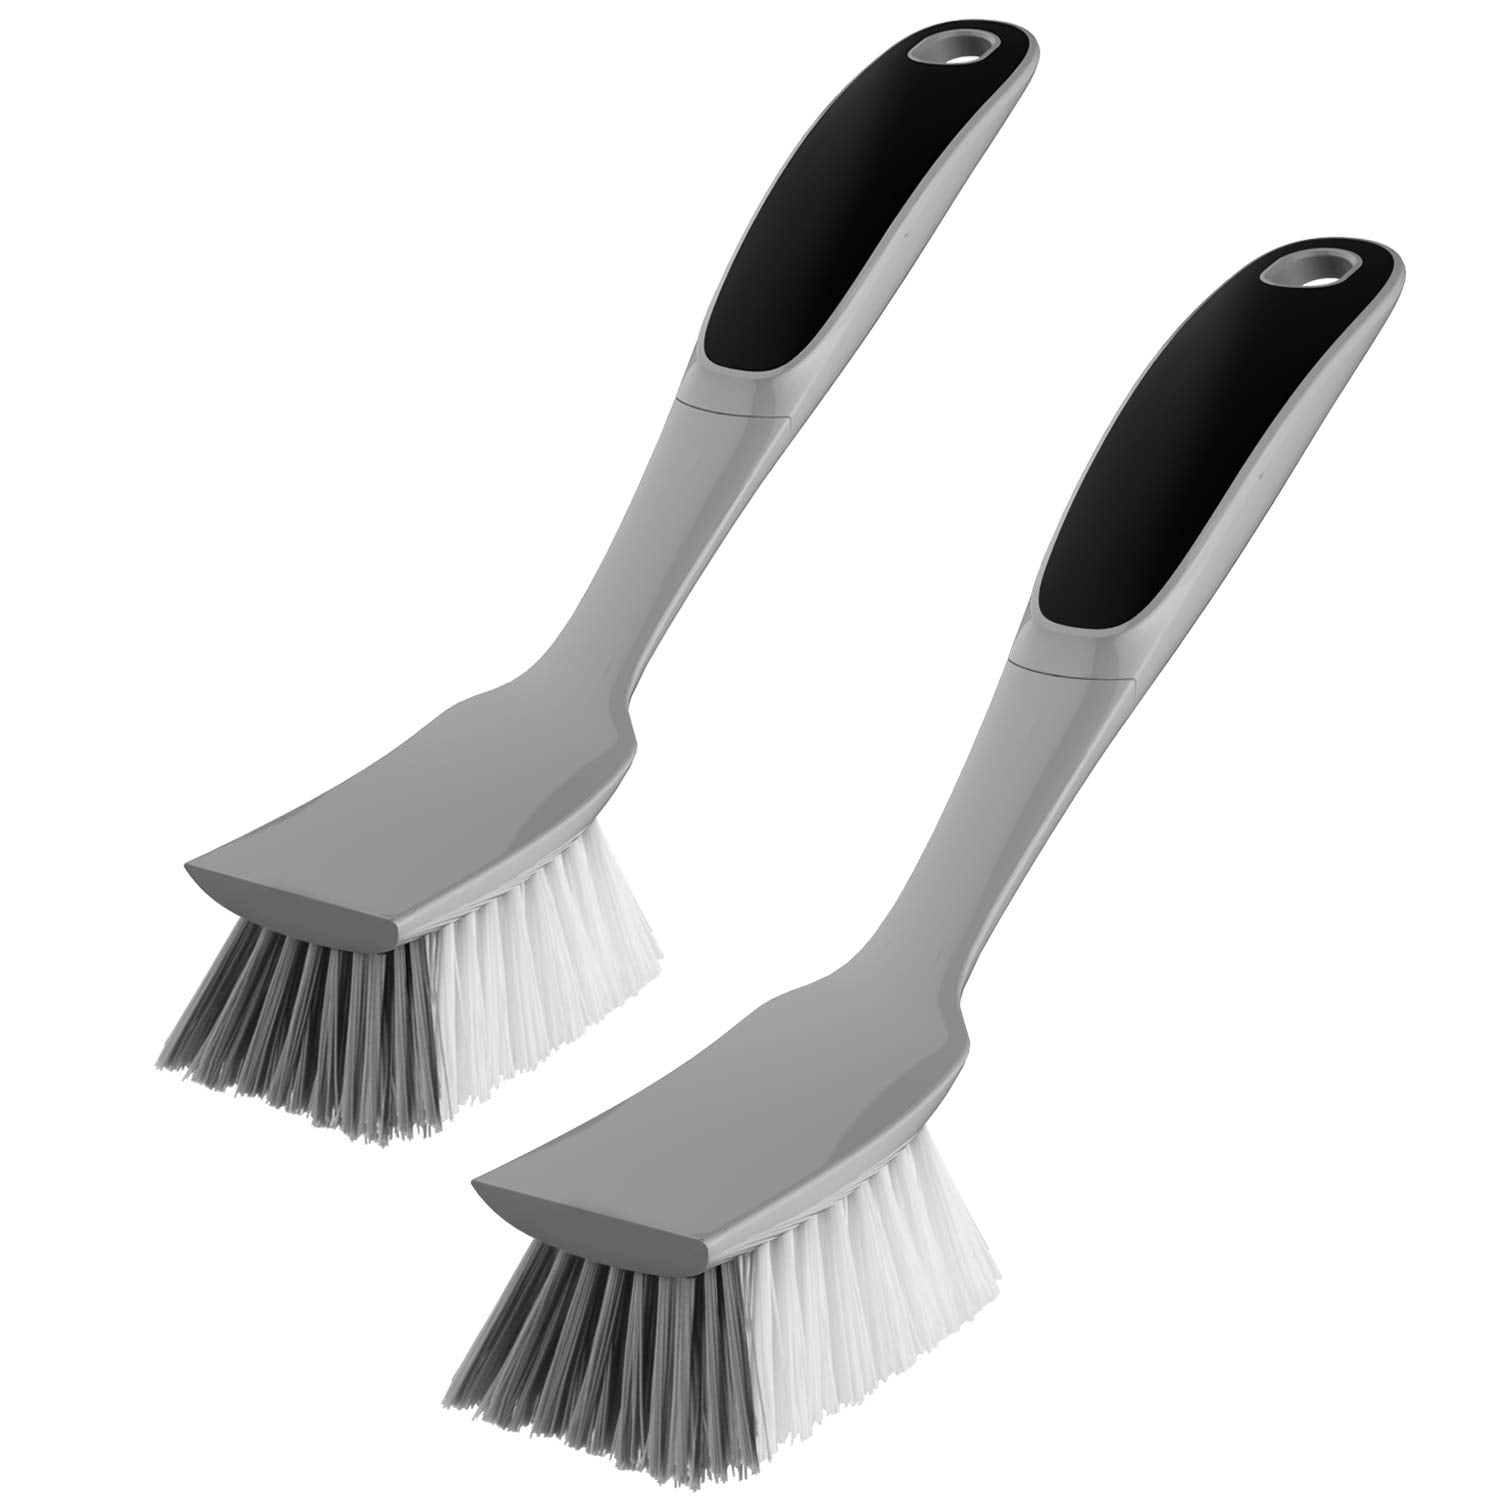 MR.Siga Dish Brush with Non Slip Handle Built-in Scraper, Scrub